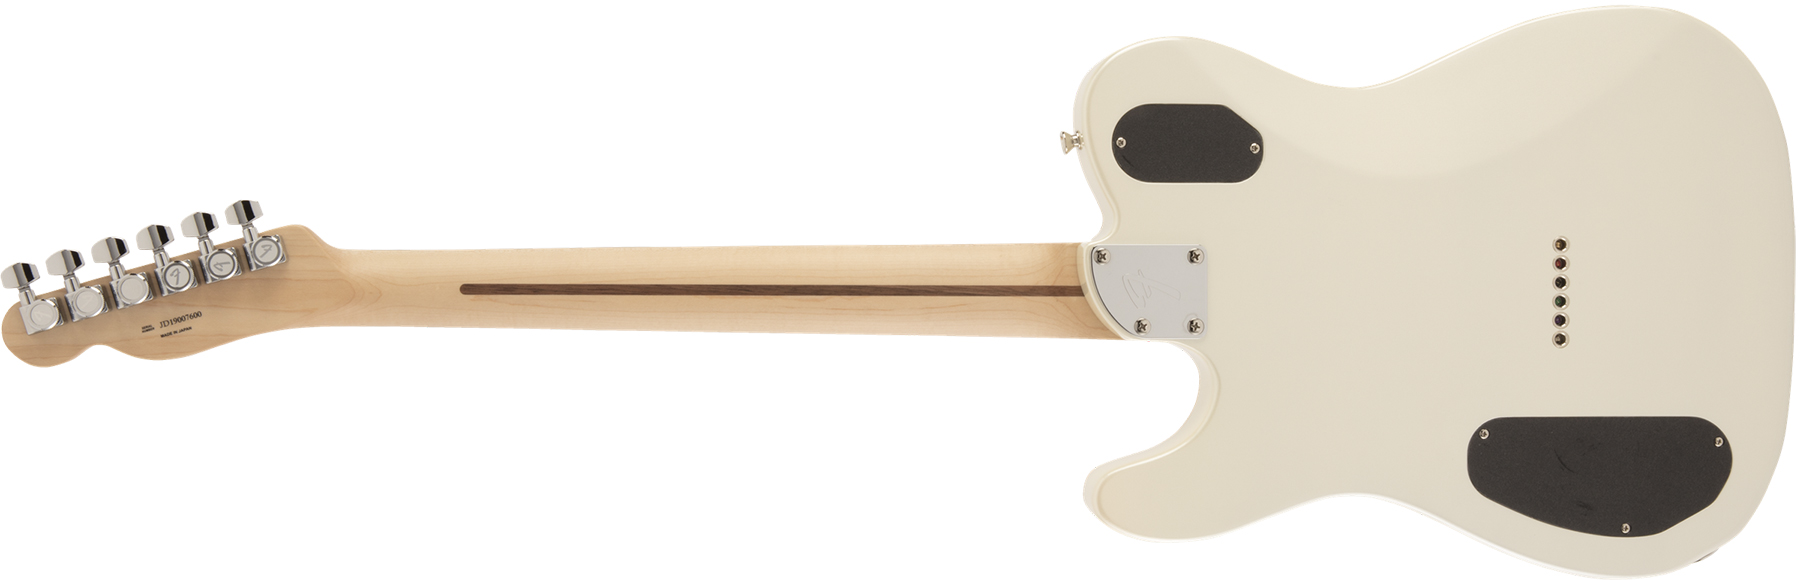 Fender Tele Modern Hh Jap 2h Ht Rw - Olympic Pearl - Guitarra eléctrica con forma de tel - Variation 1